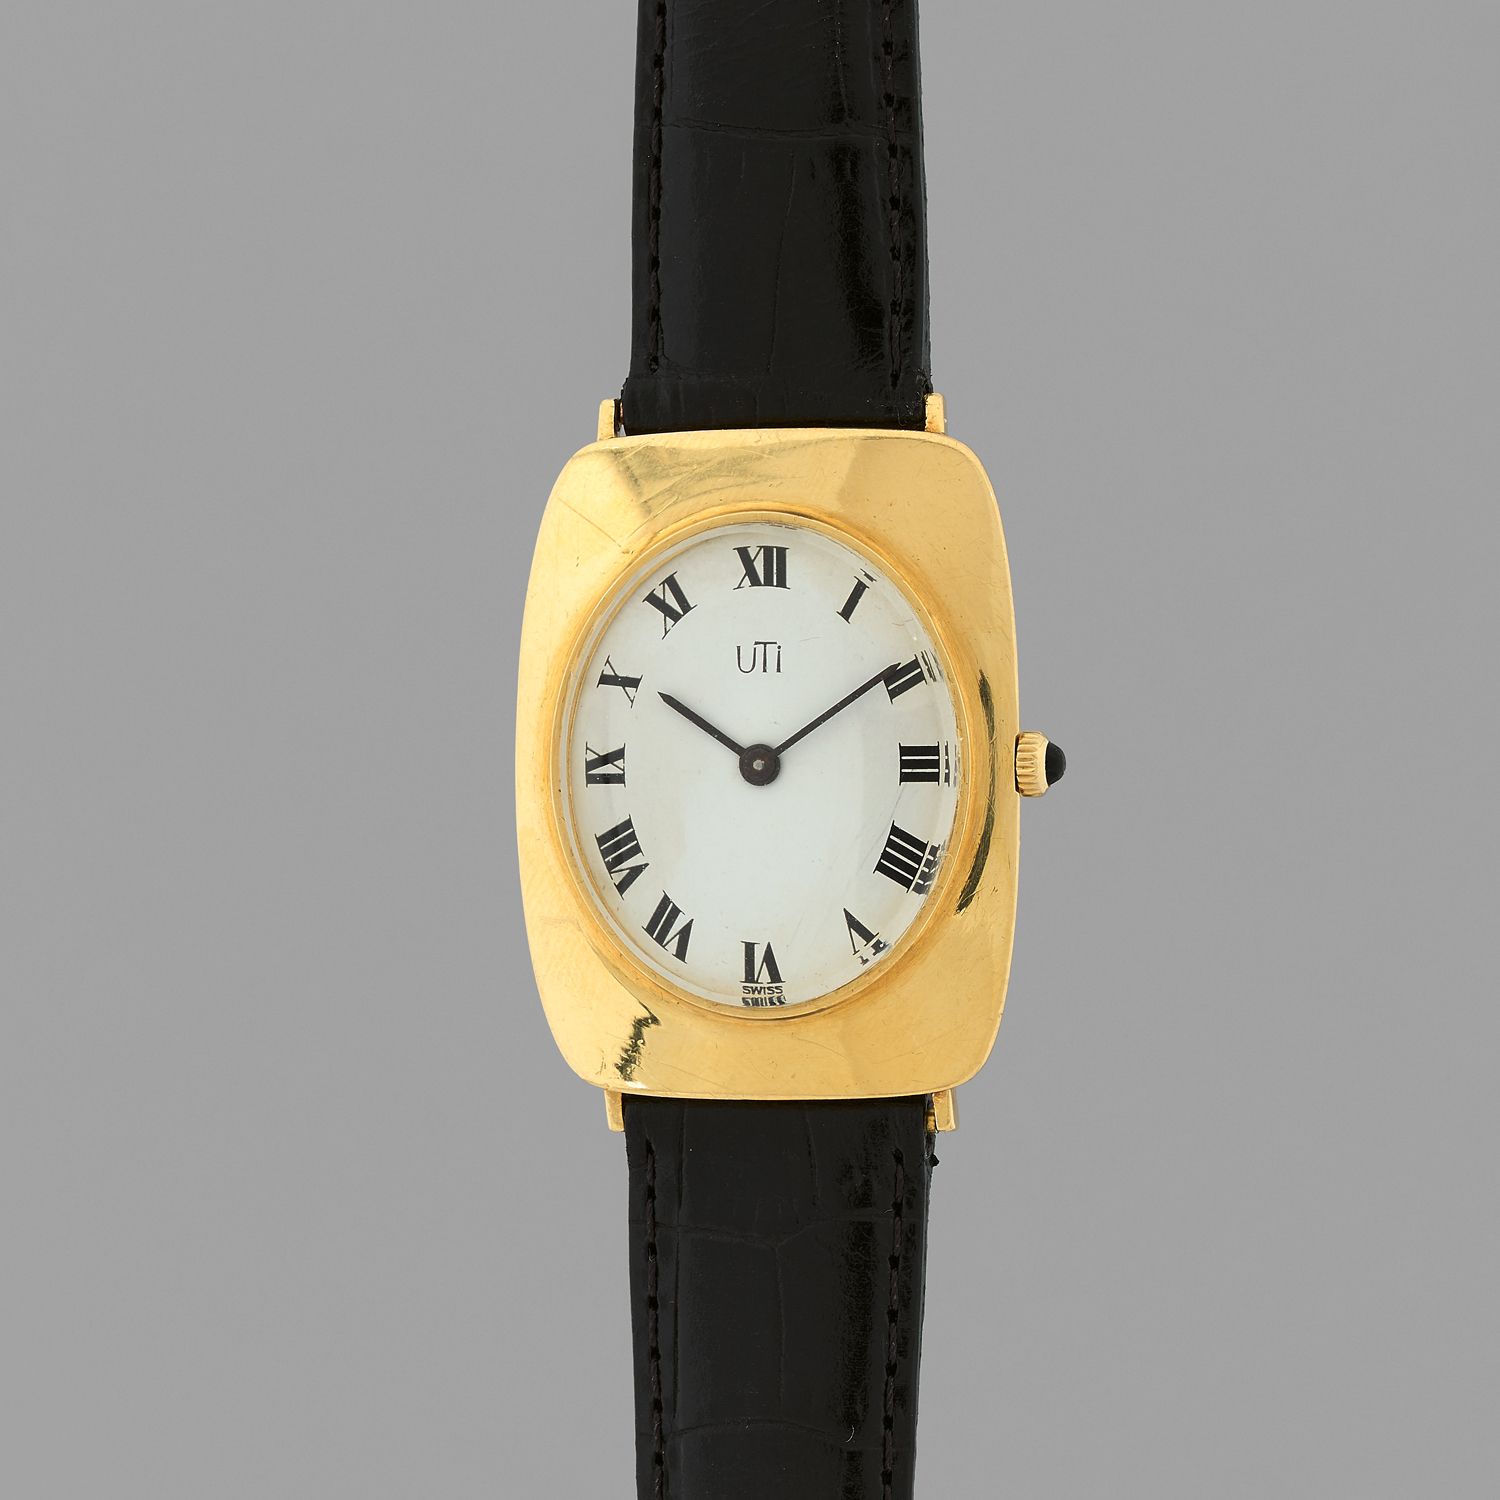 Null UTI
Discovolante.
About: 1970.
Yellow gold bracelet watch 750/1000, white e&hellip;